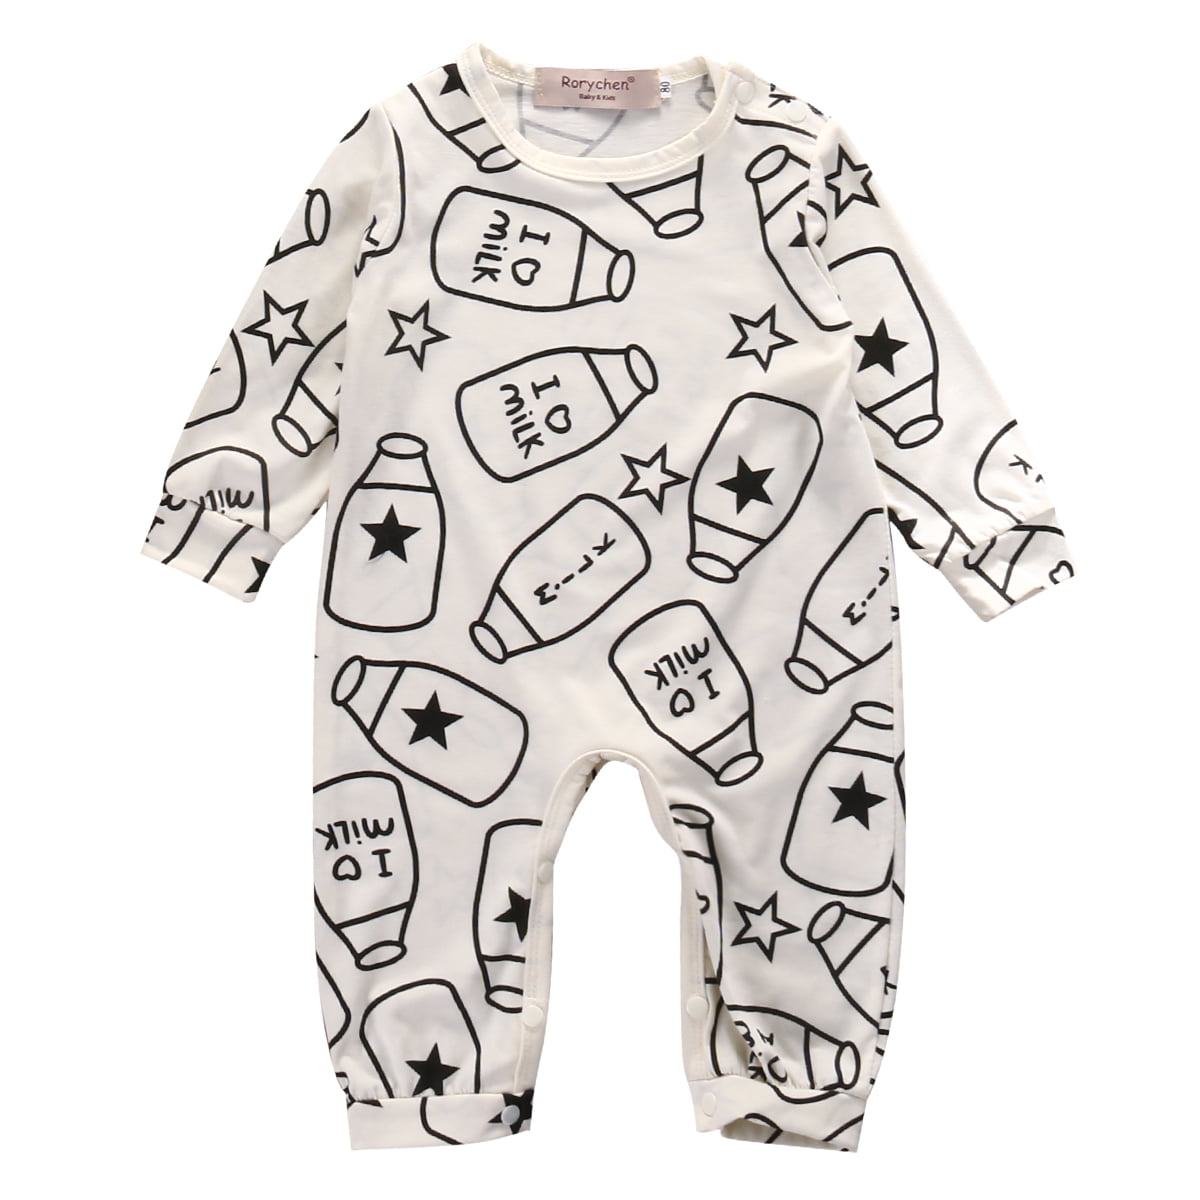 Newborn Kids Baby Boys Girls Infant Rompers Jumpsuit Bodysuit Clothes Outfit Set 